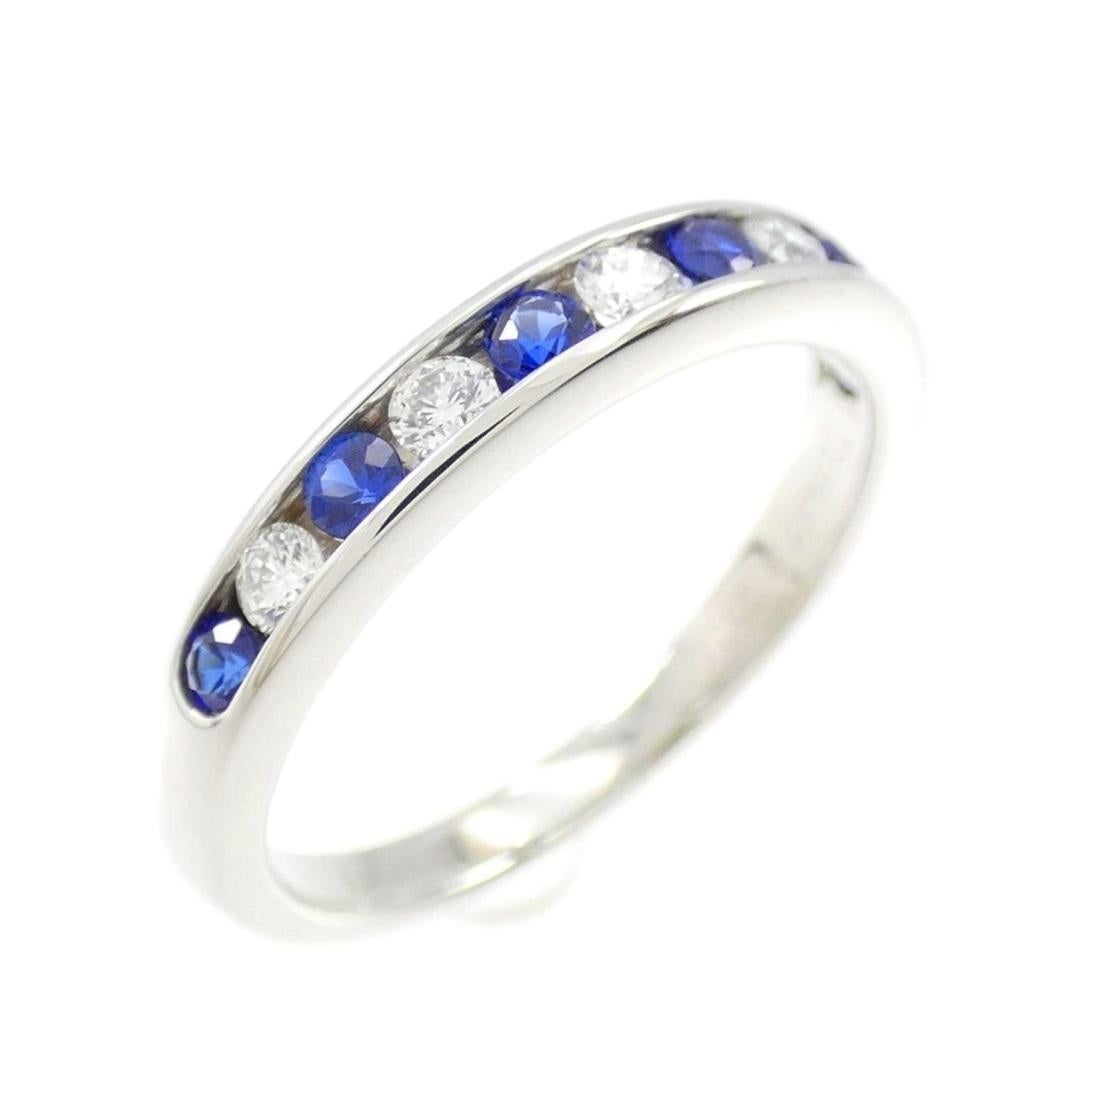 TIFFANY & Co. Platinum 3mm Half Circle Diamond Sapphire Band Ring 6.5

Metal: Platinum 
Size: 6.5
Band Width: 3mm 
Diamond: 5 round brilliant diamonds, total carat weight .17 
Sapphire: 6 round blue sapphires, total carat weight .27  
Hallmark: